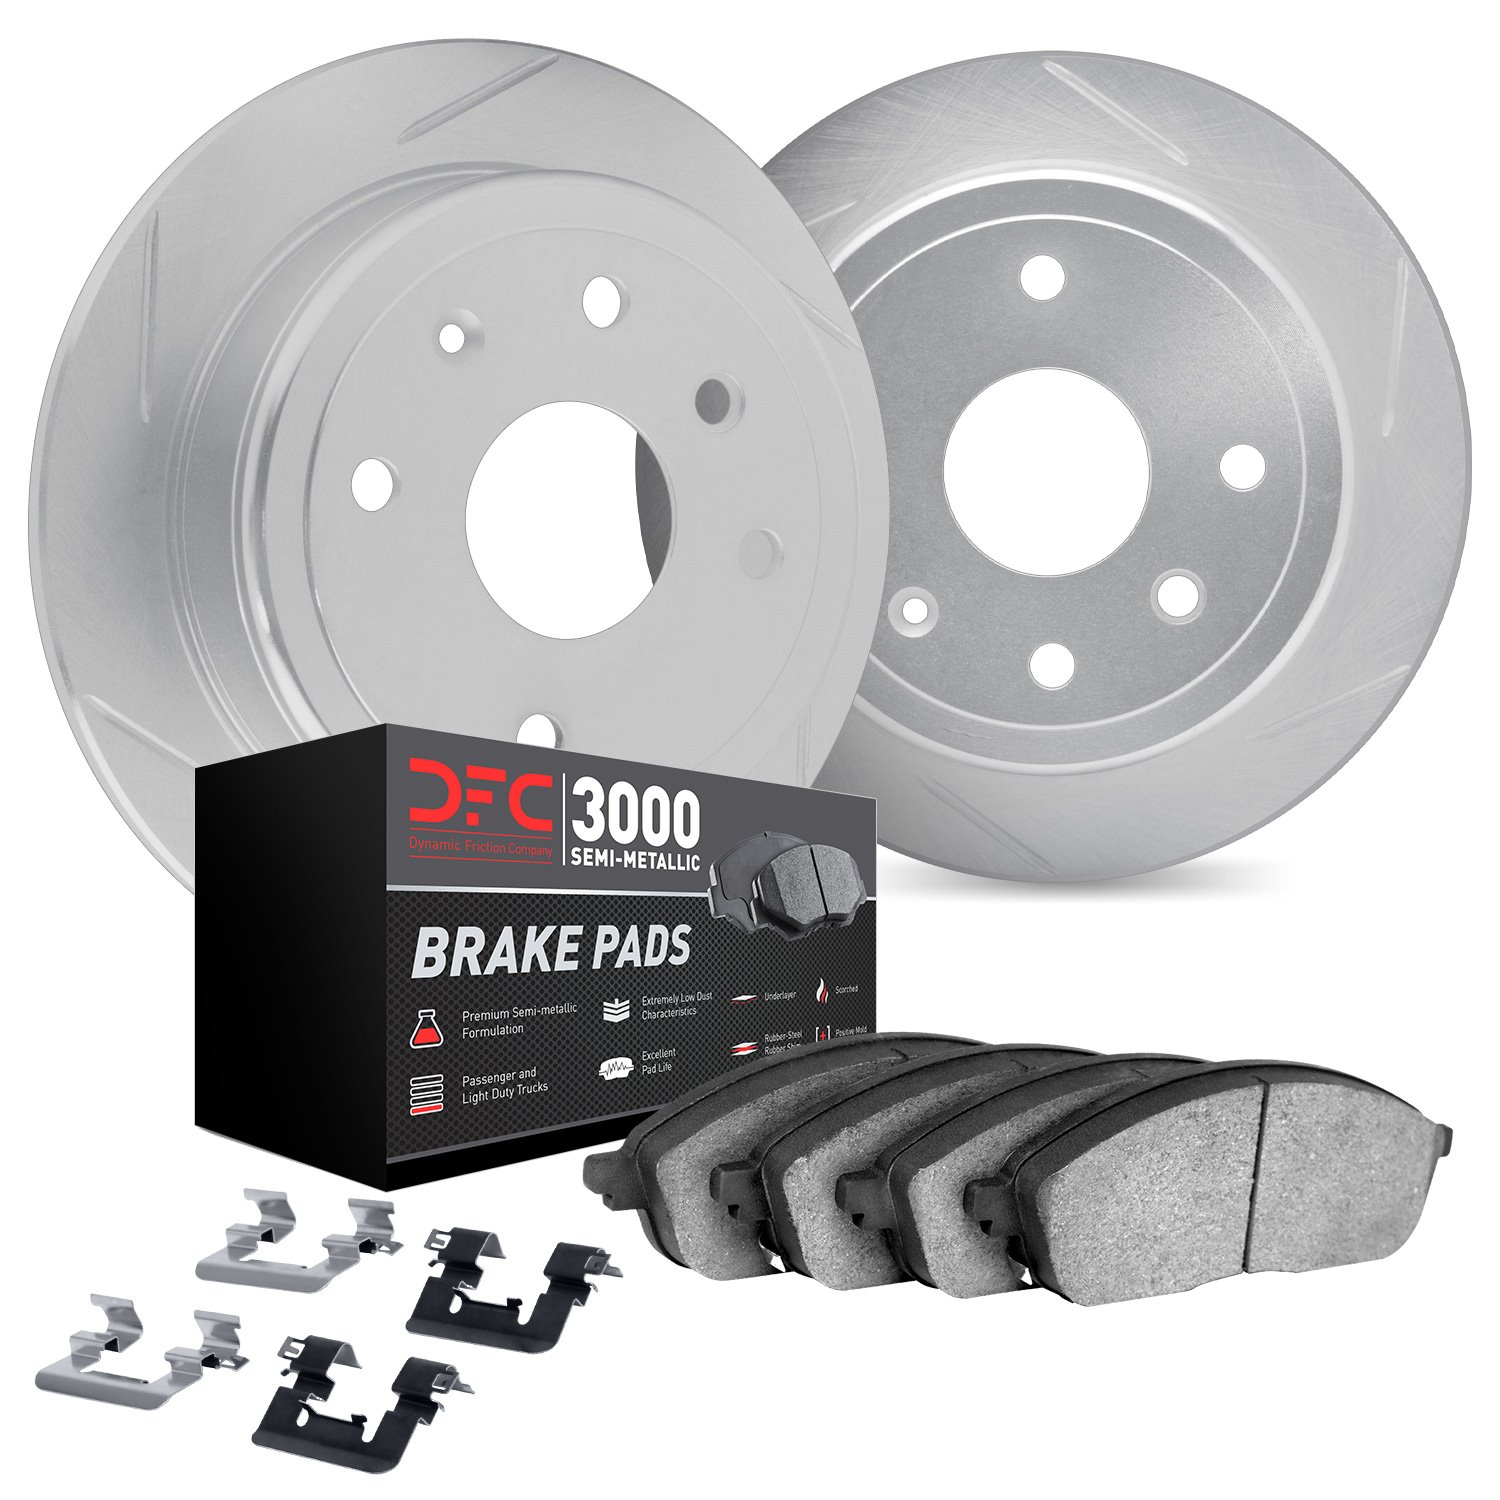 5112-59110 Slotted Brake Rotors with 3000-Series Semi-Metallic Brake Pads Kit & Hardware [Silver], 2019-2019 Acura/Honda, Positi